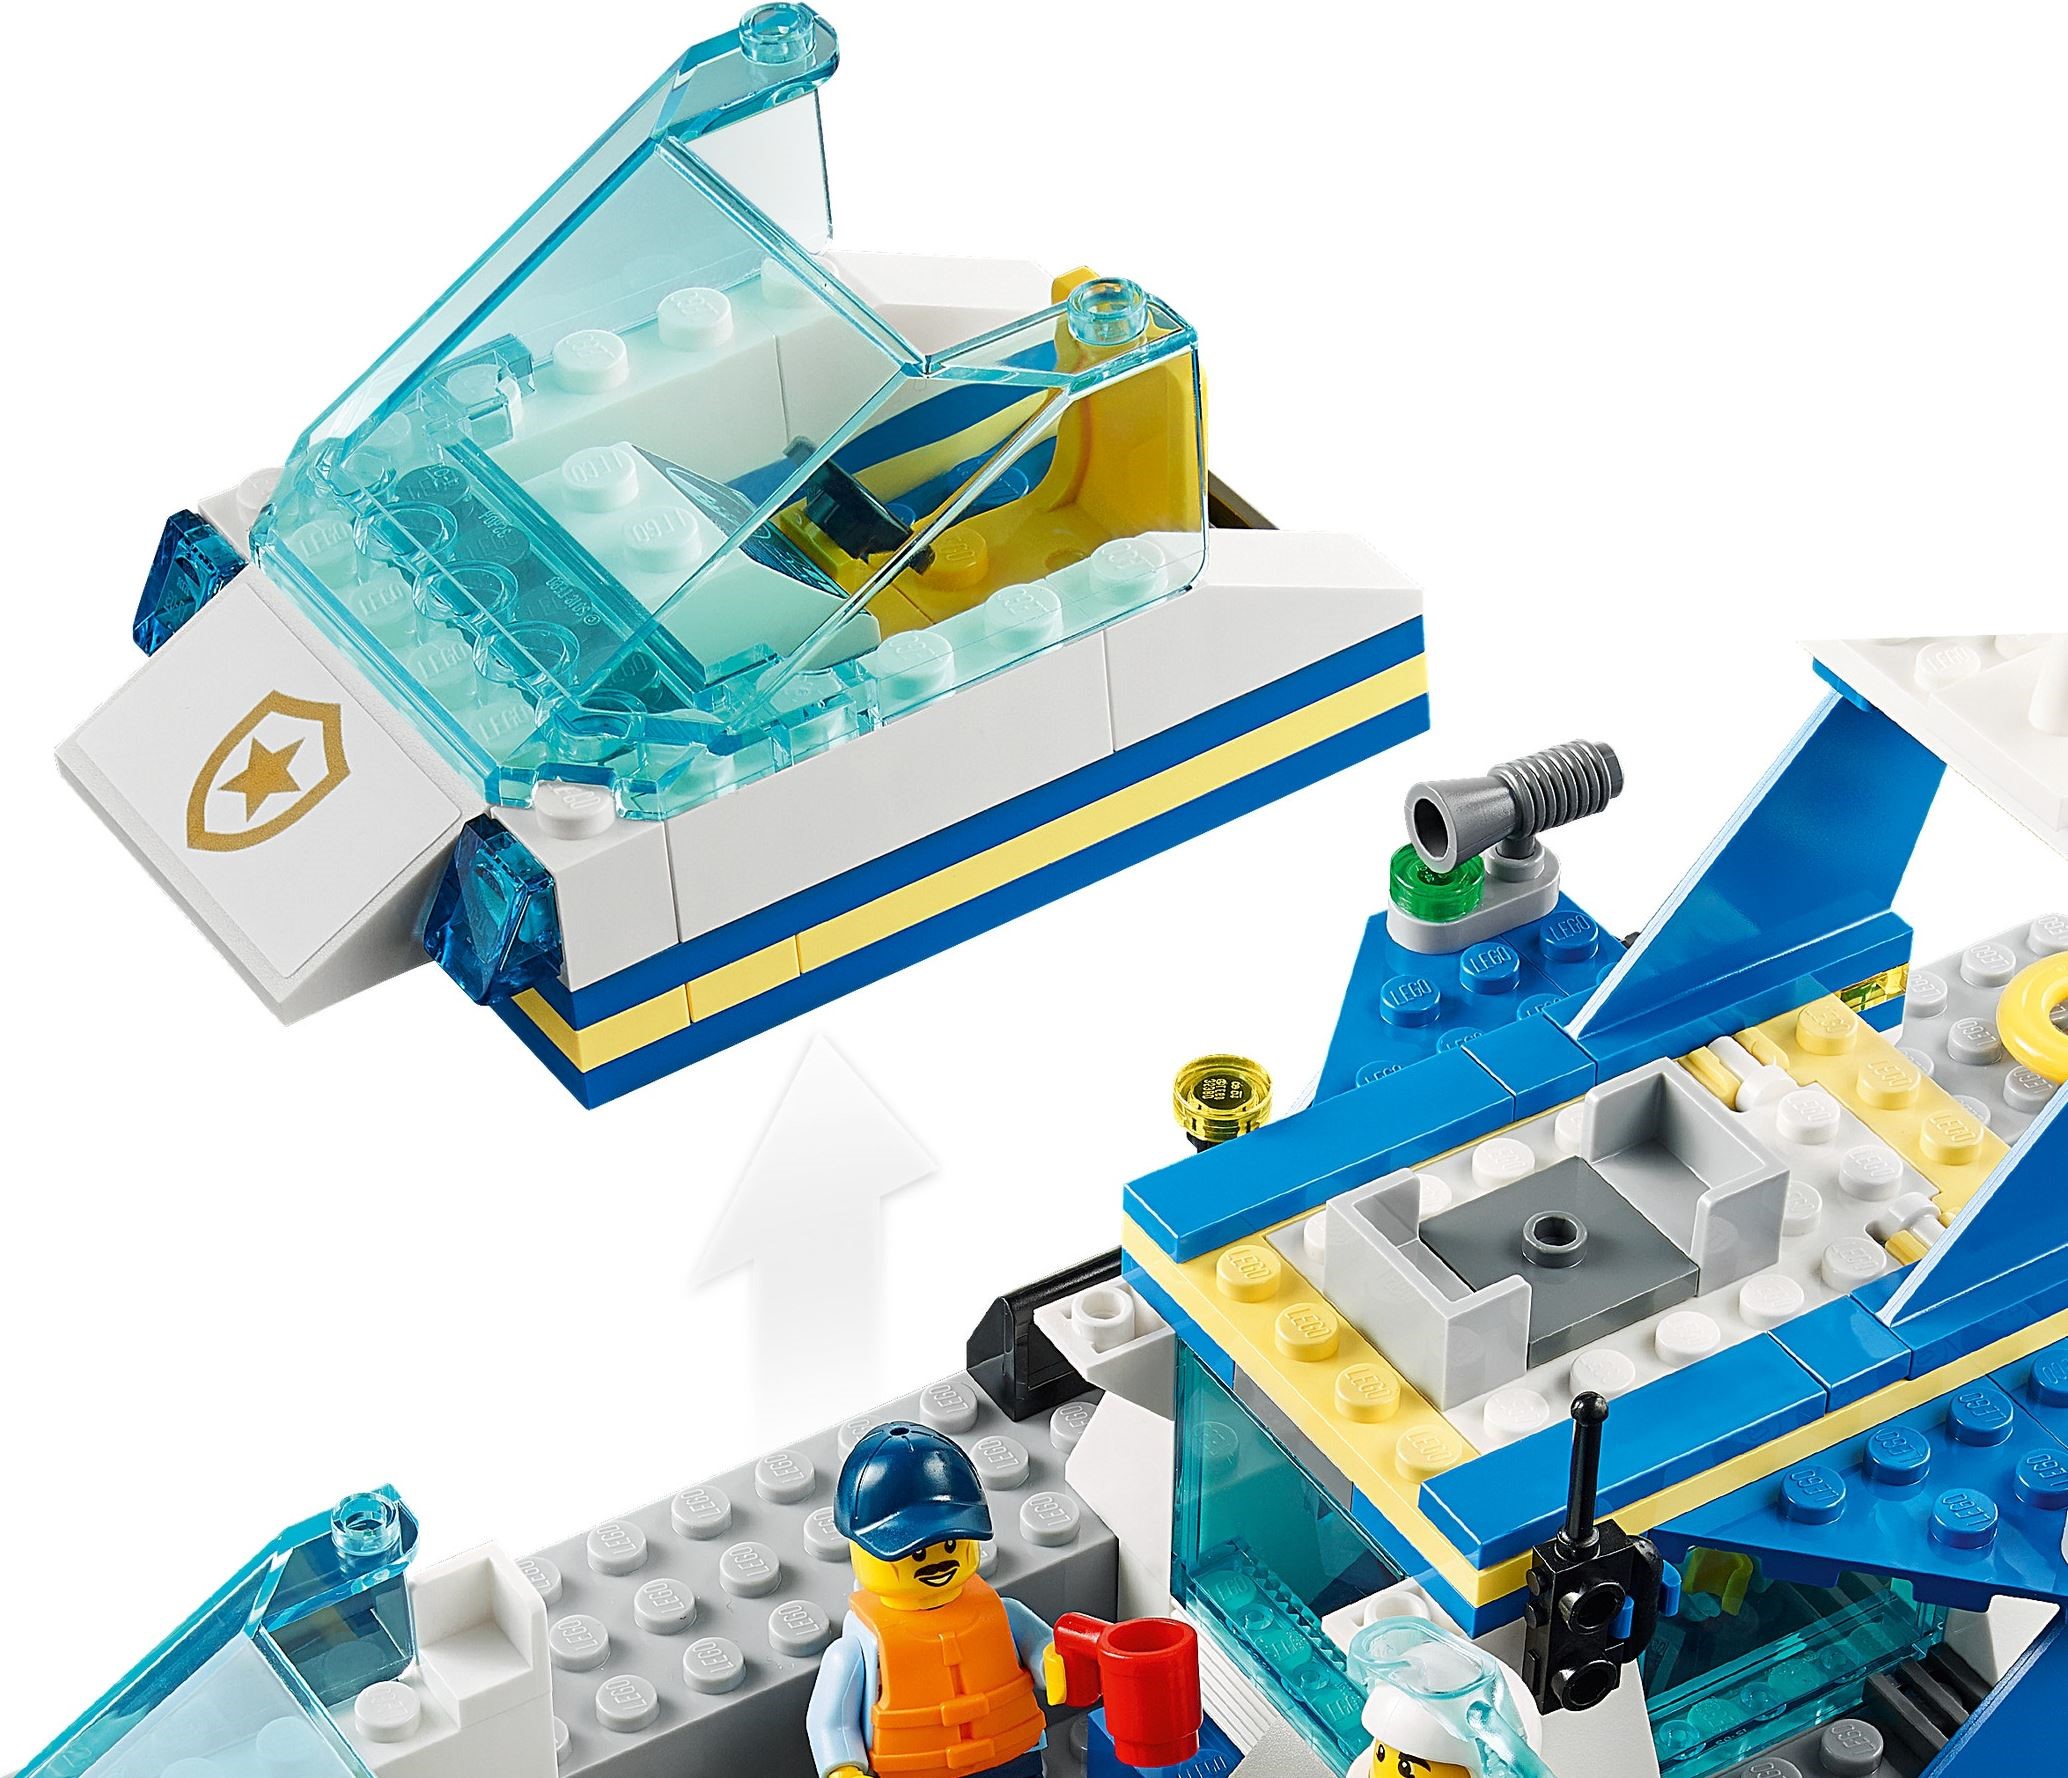 Lego 60277 Police Patrol Boat - Lego City set for sale best price